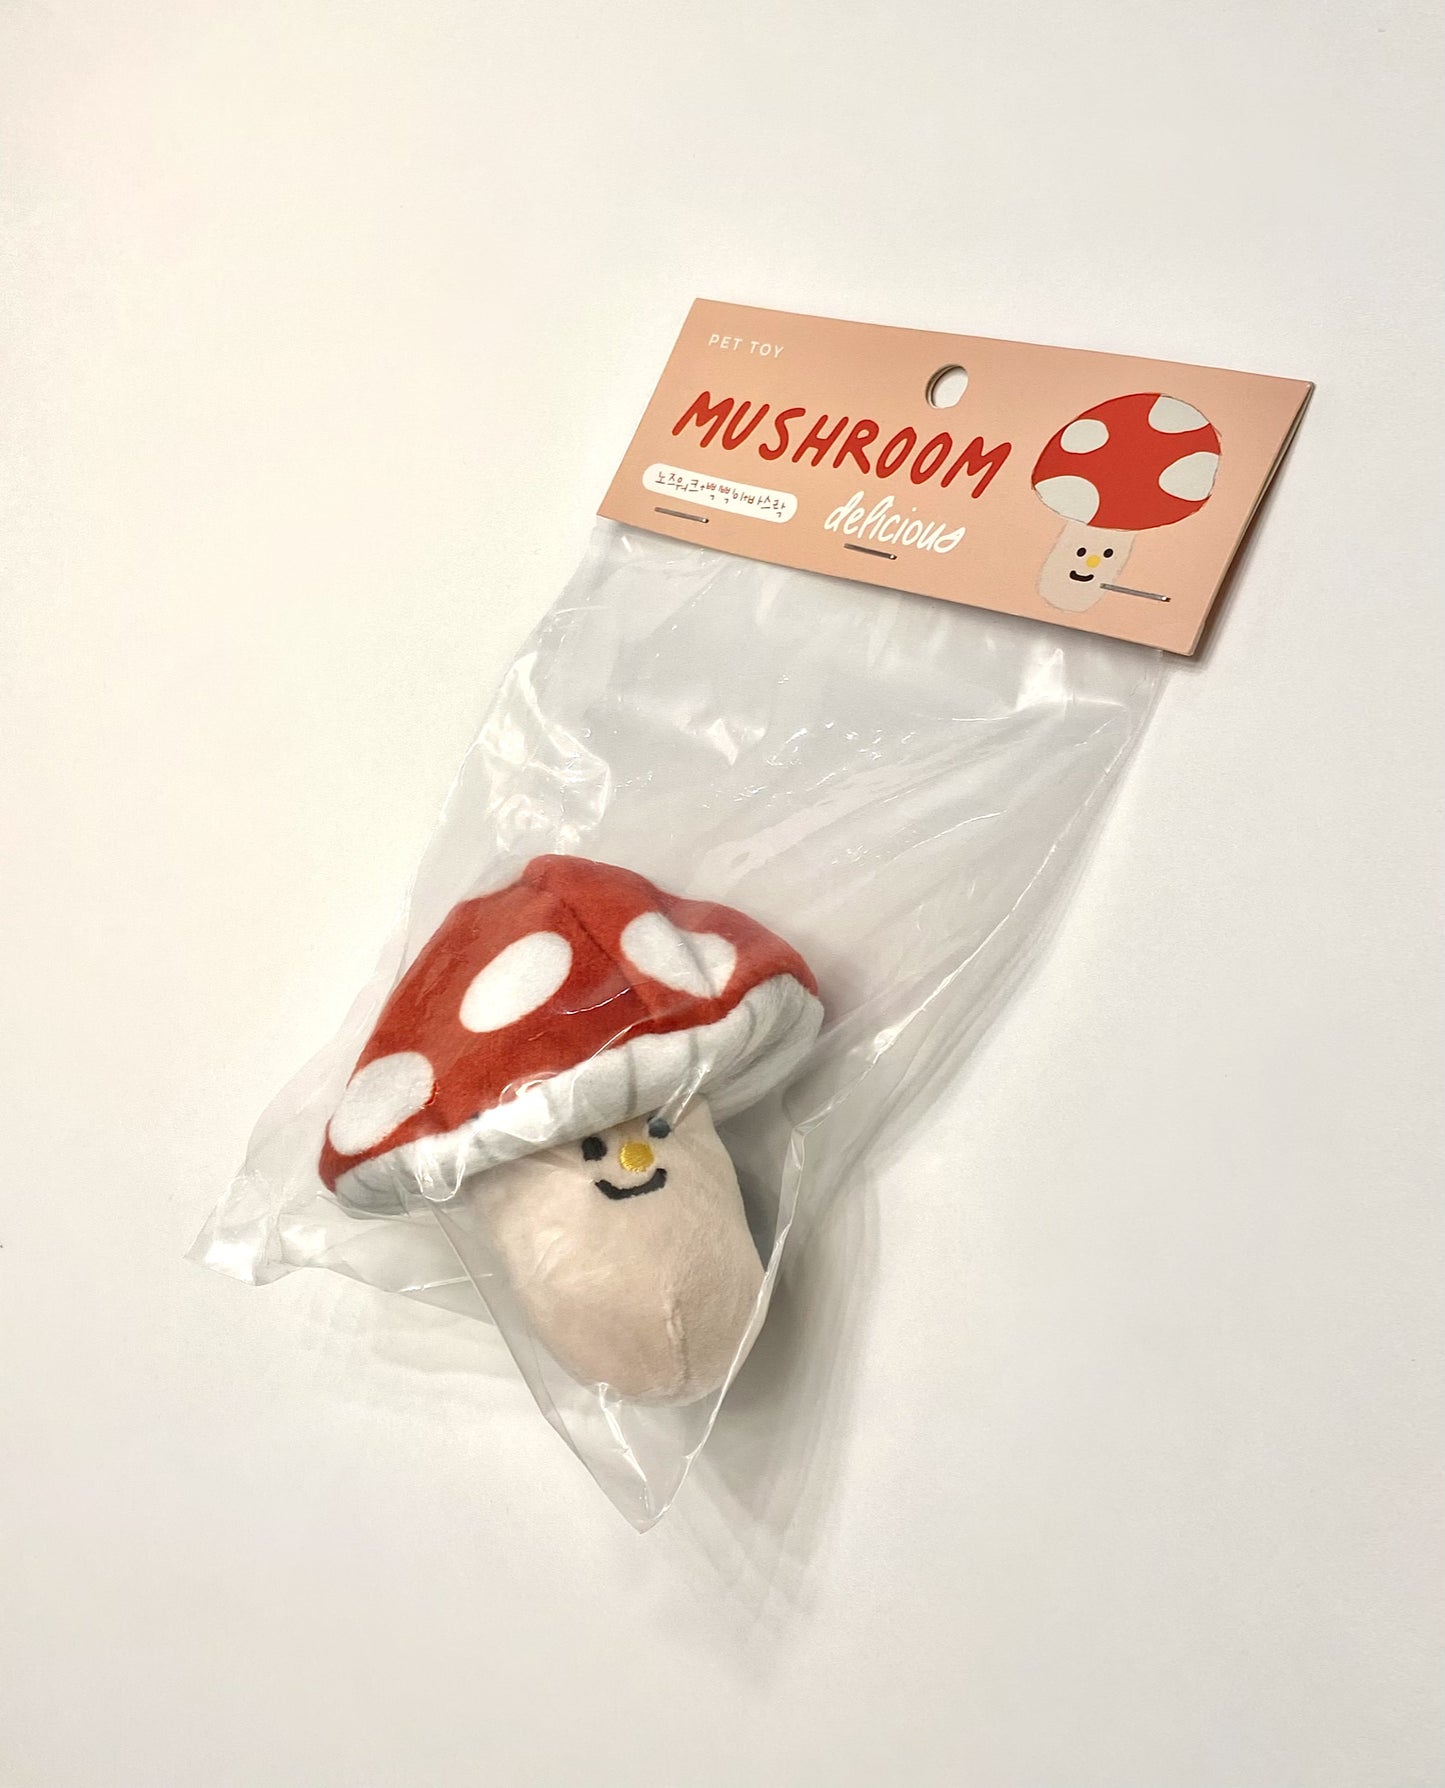 Mushroom nosework toy